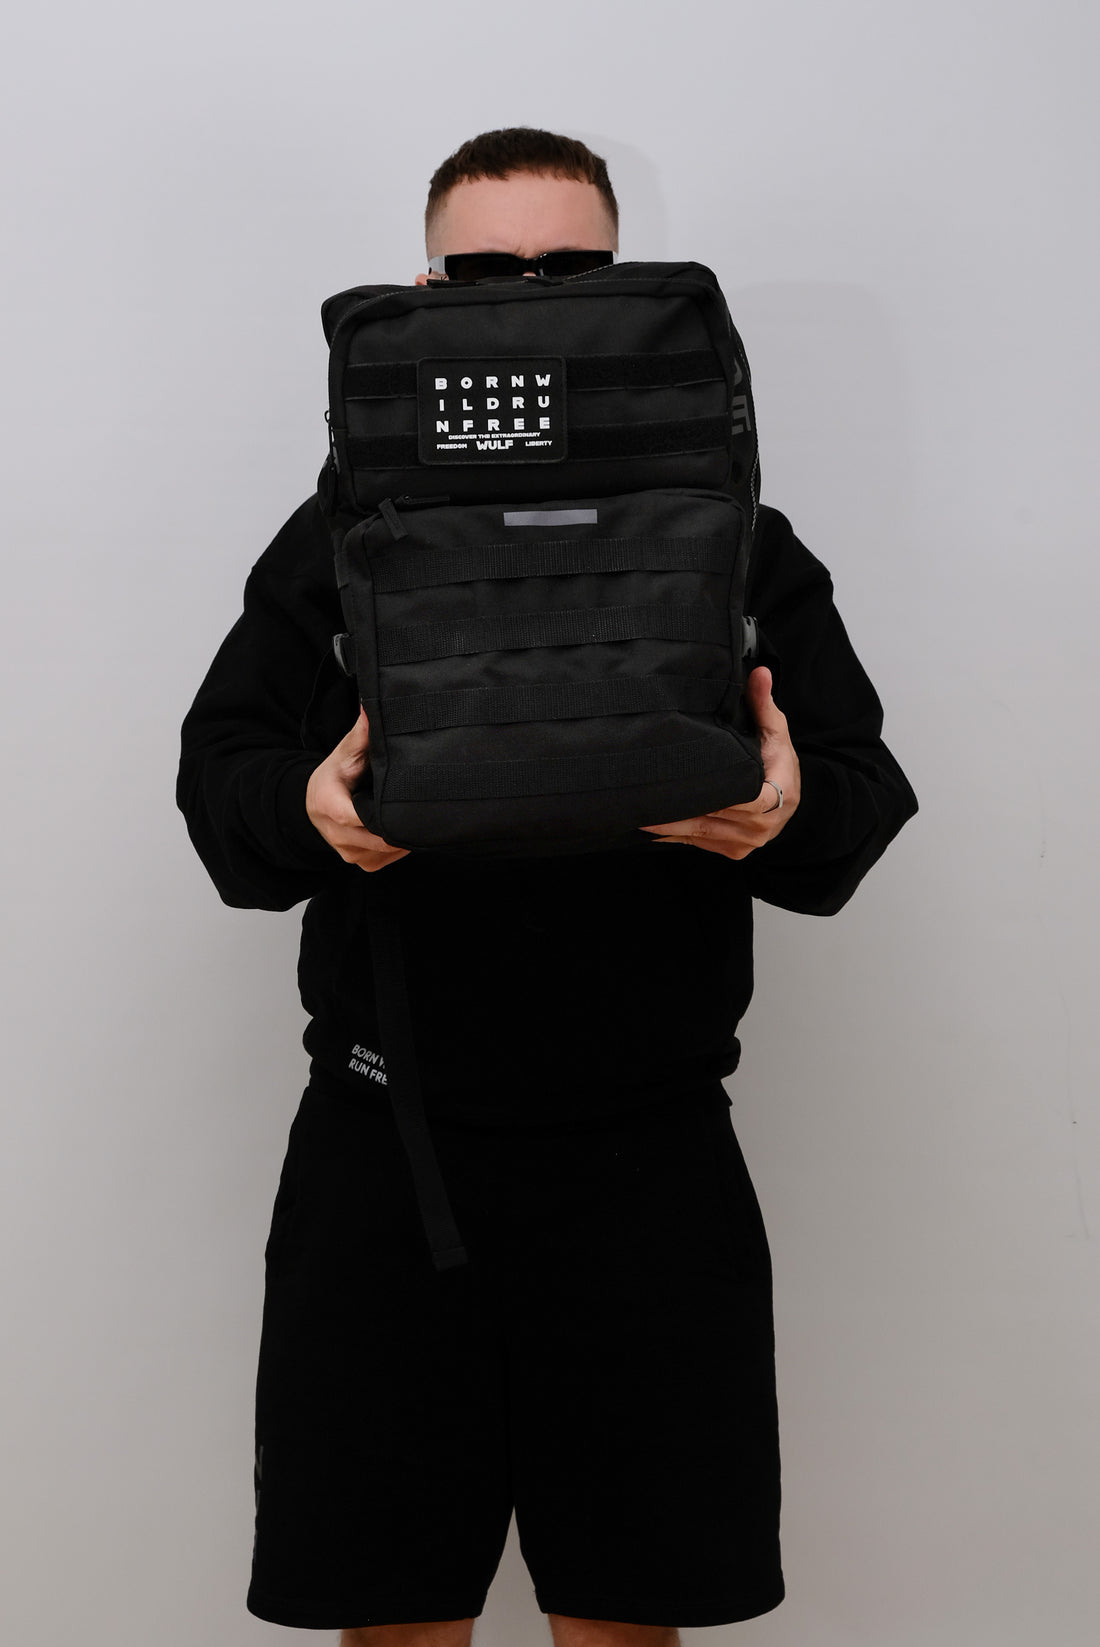 Wulf 70°112 Tactical Backpack, Black Reflector